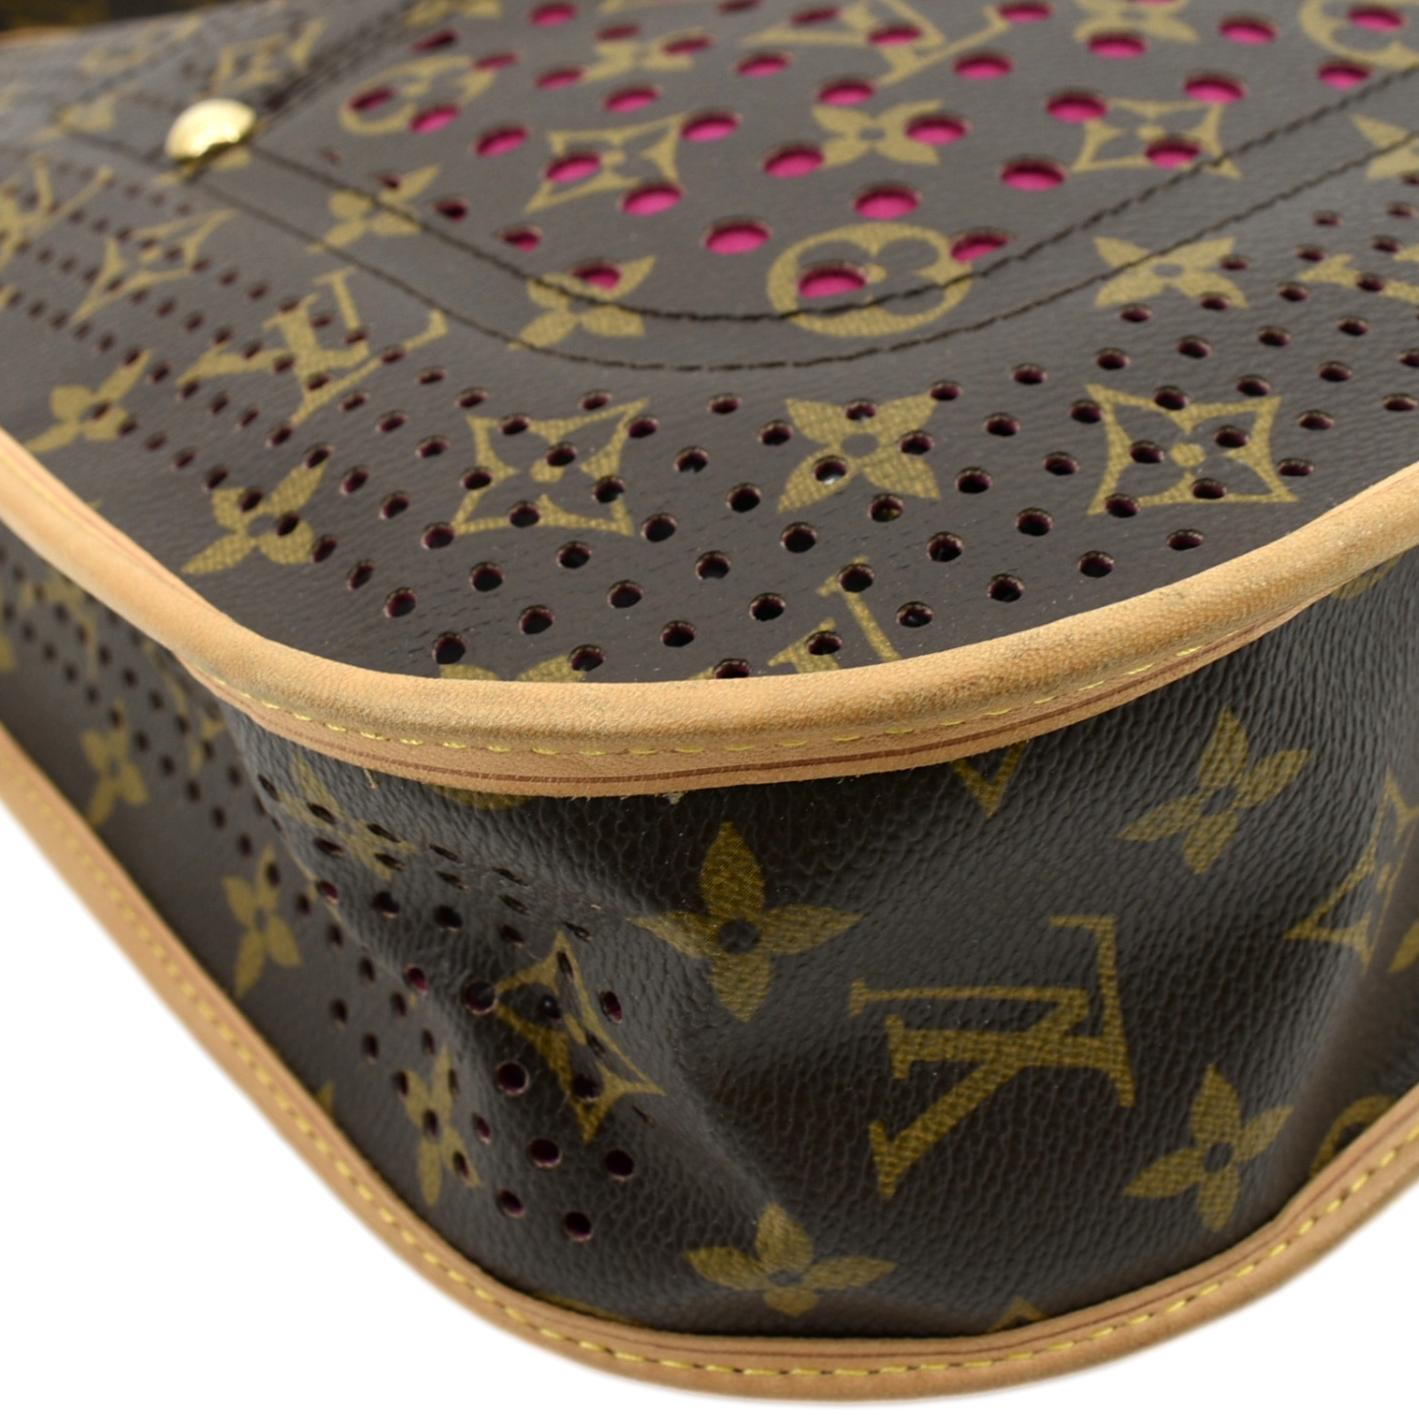 Musette Monogram Perforated – Keeks Designer Handbags